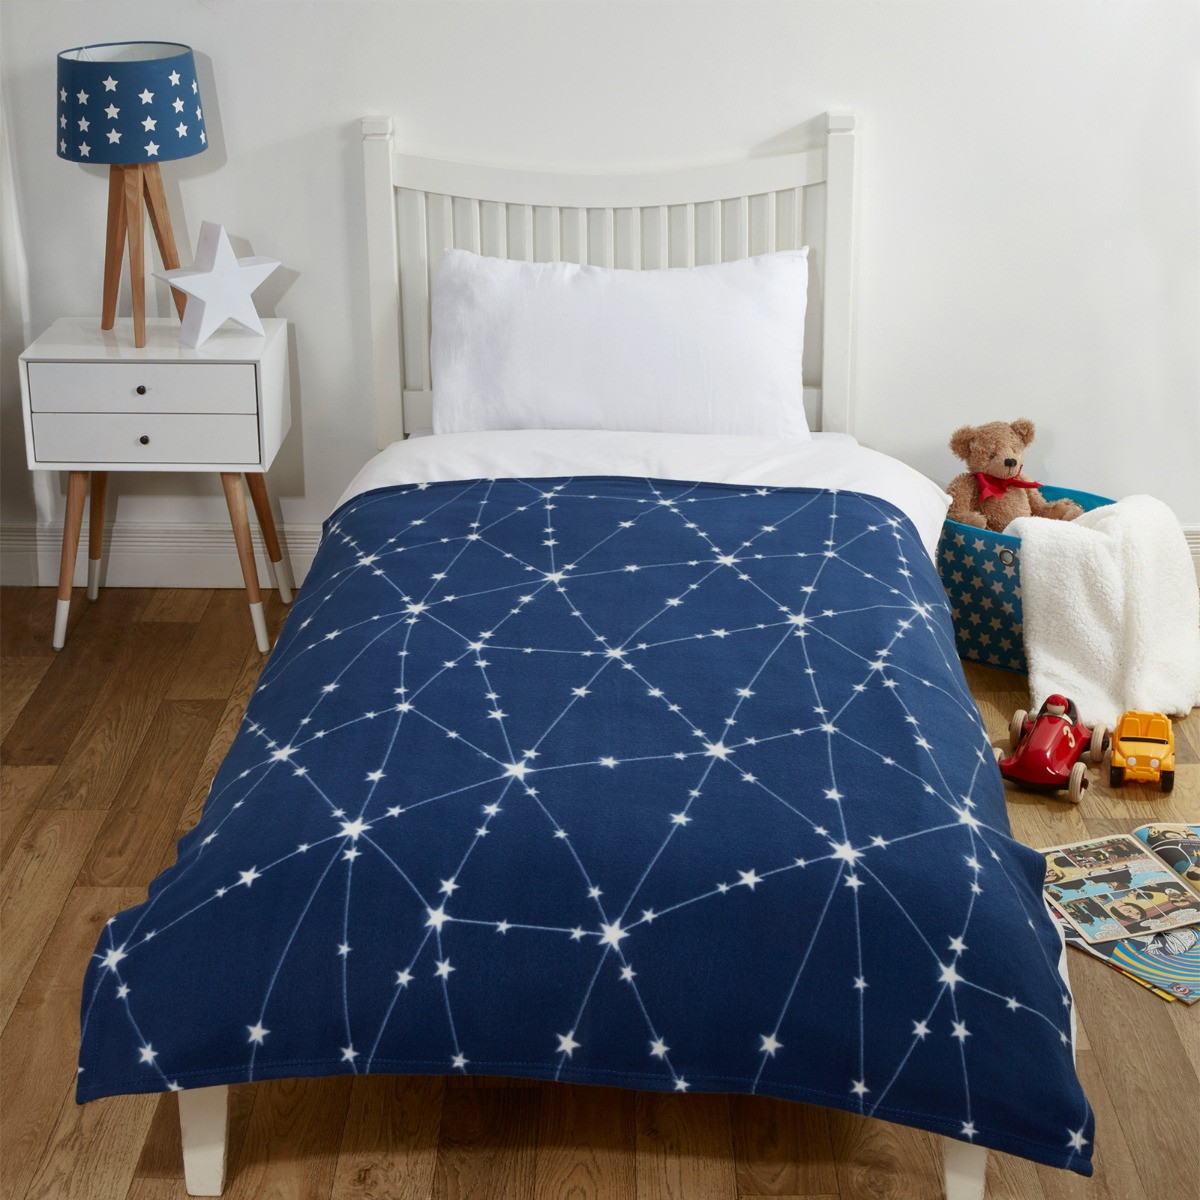 Dreamscene Galaxy Star Fleece Throw, Navy Blue - 120 x 150cm>